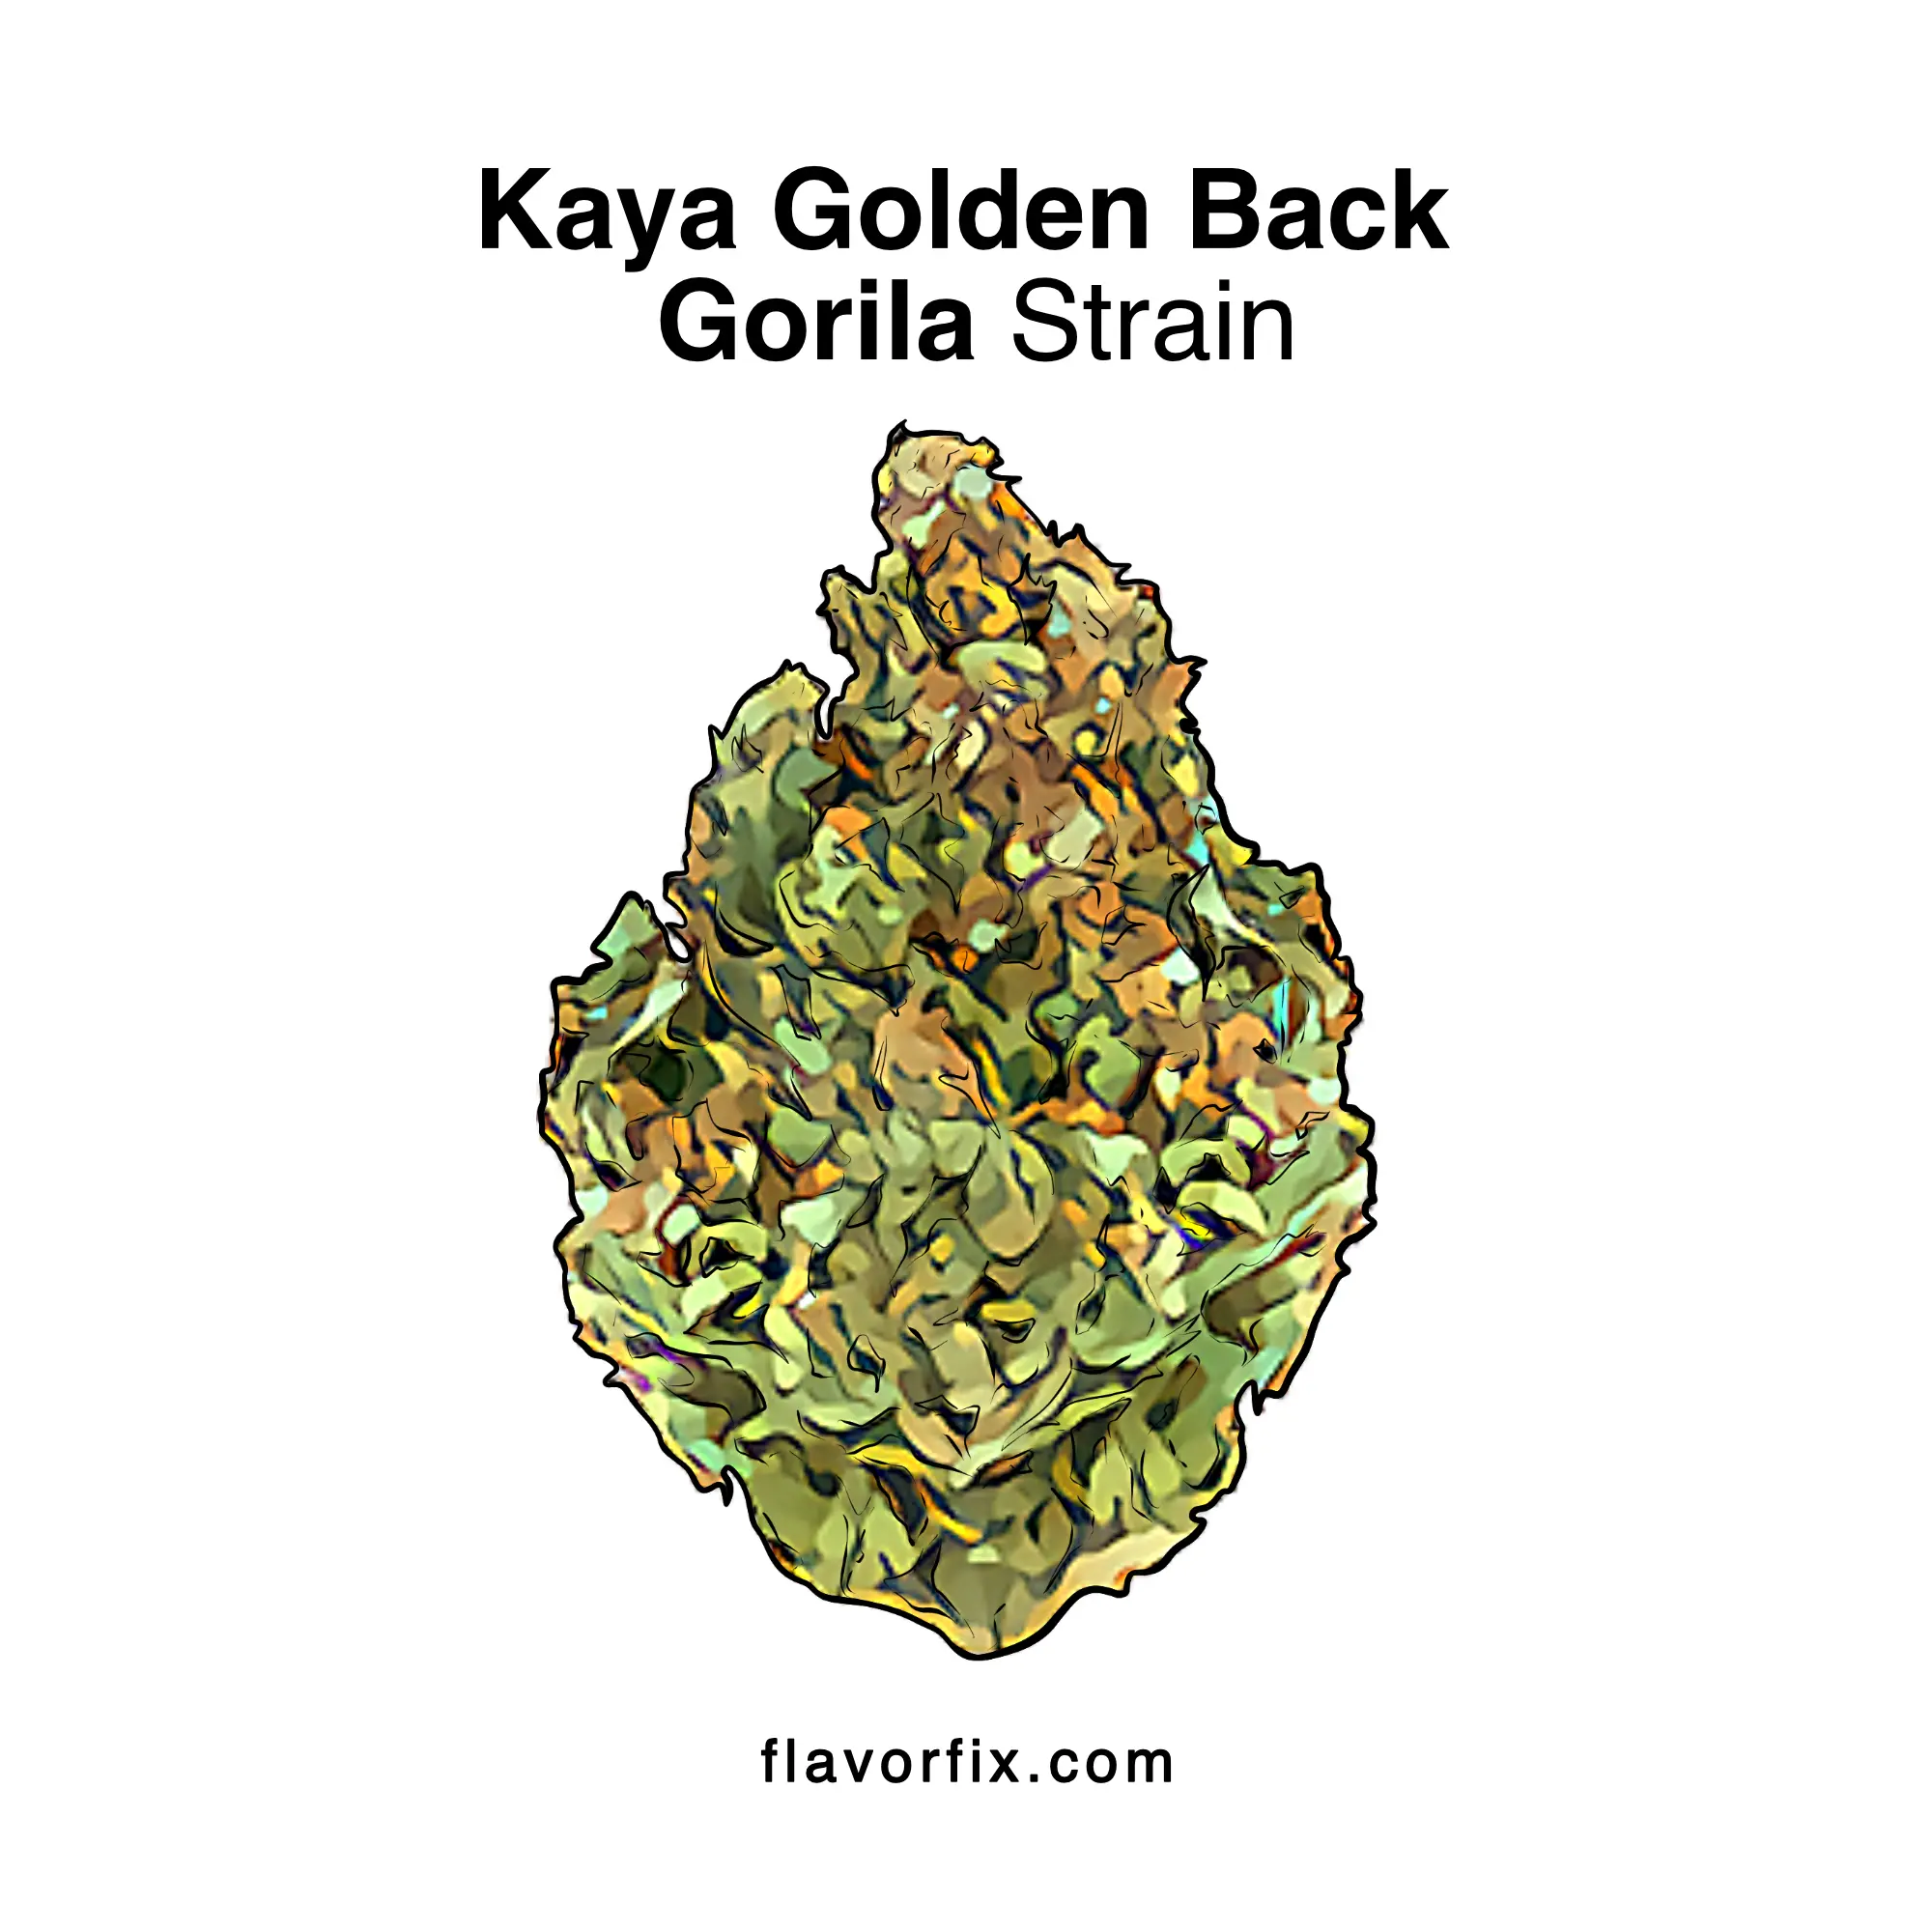 Kaya Golden Back Gorilla Strain